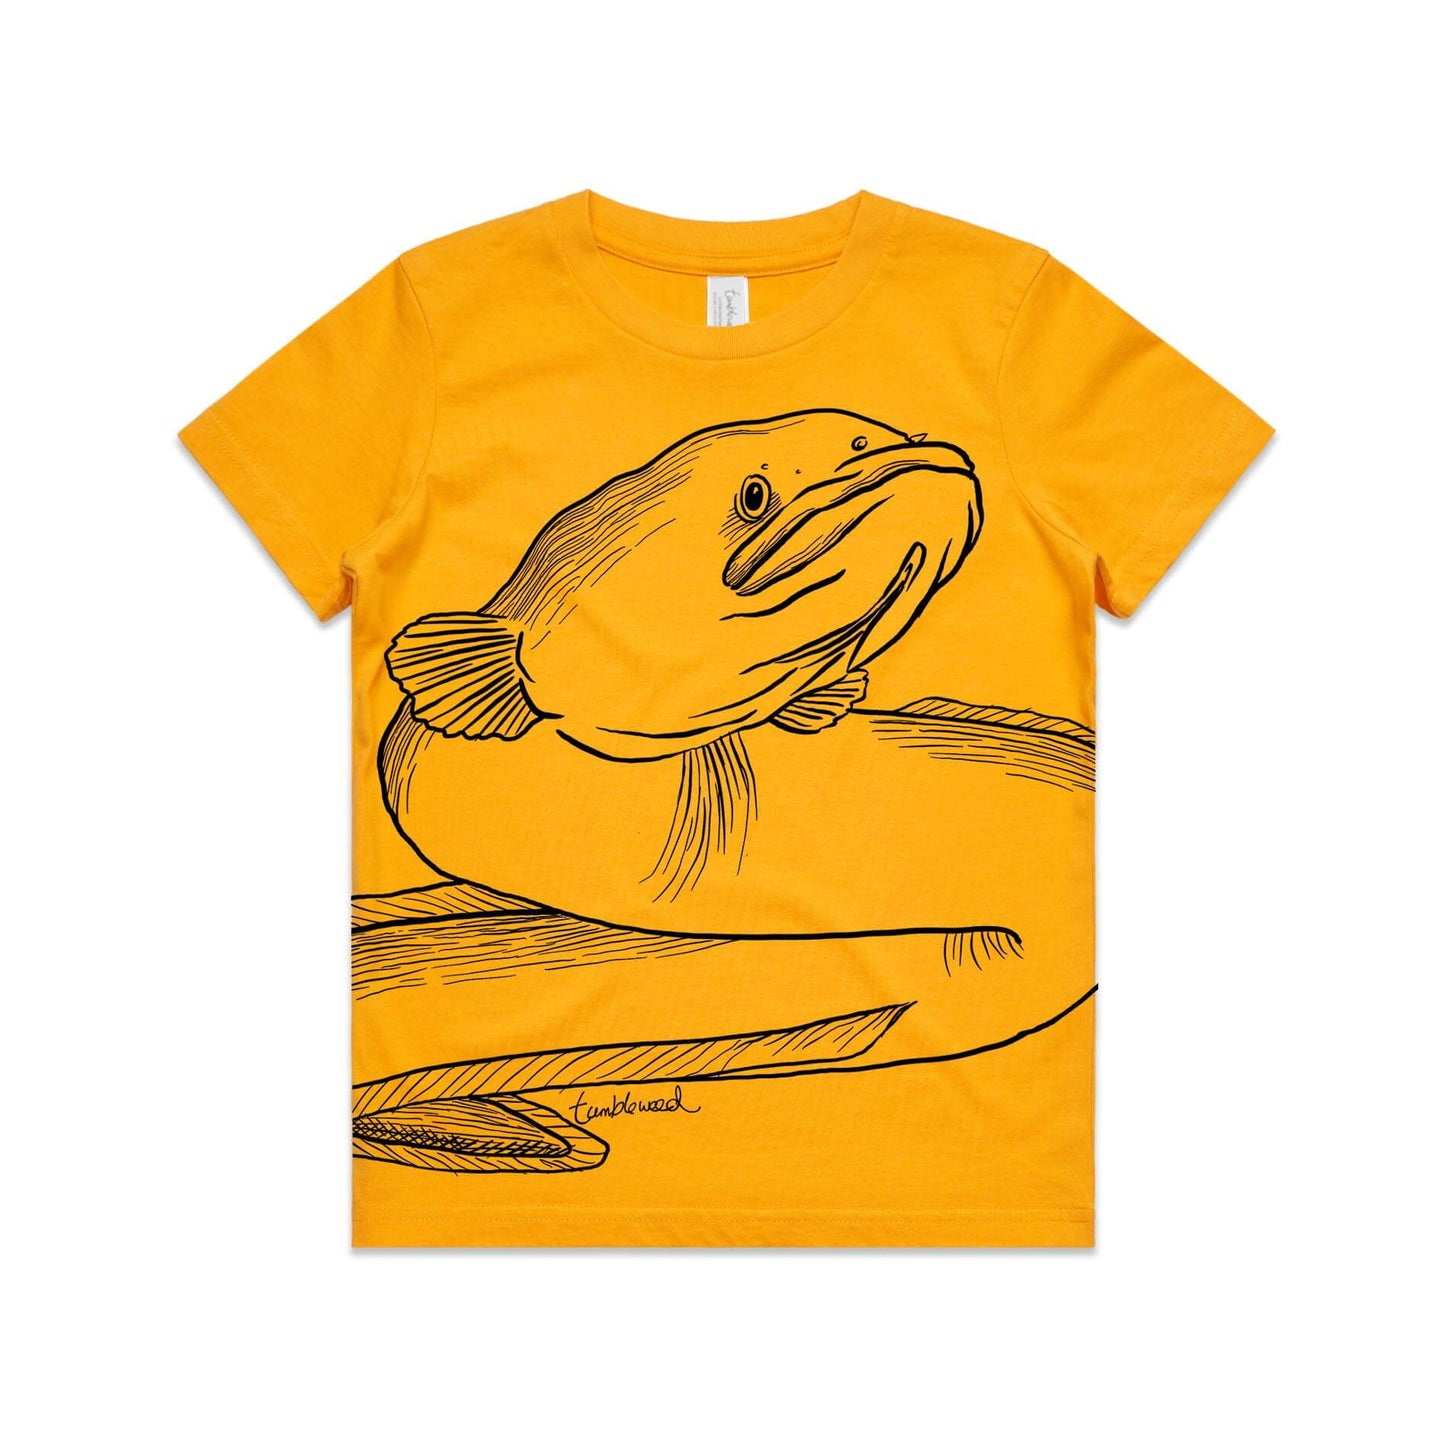 Gold, cotton kids' t-shirt with screen printed Long fin eel/tuna design.